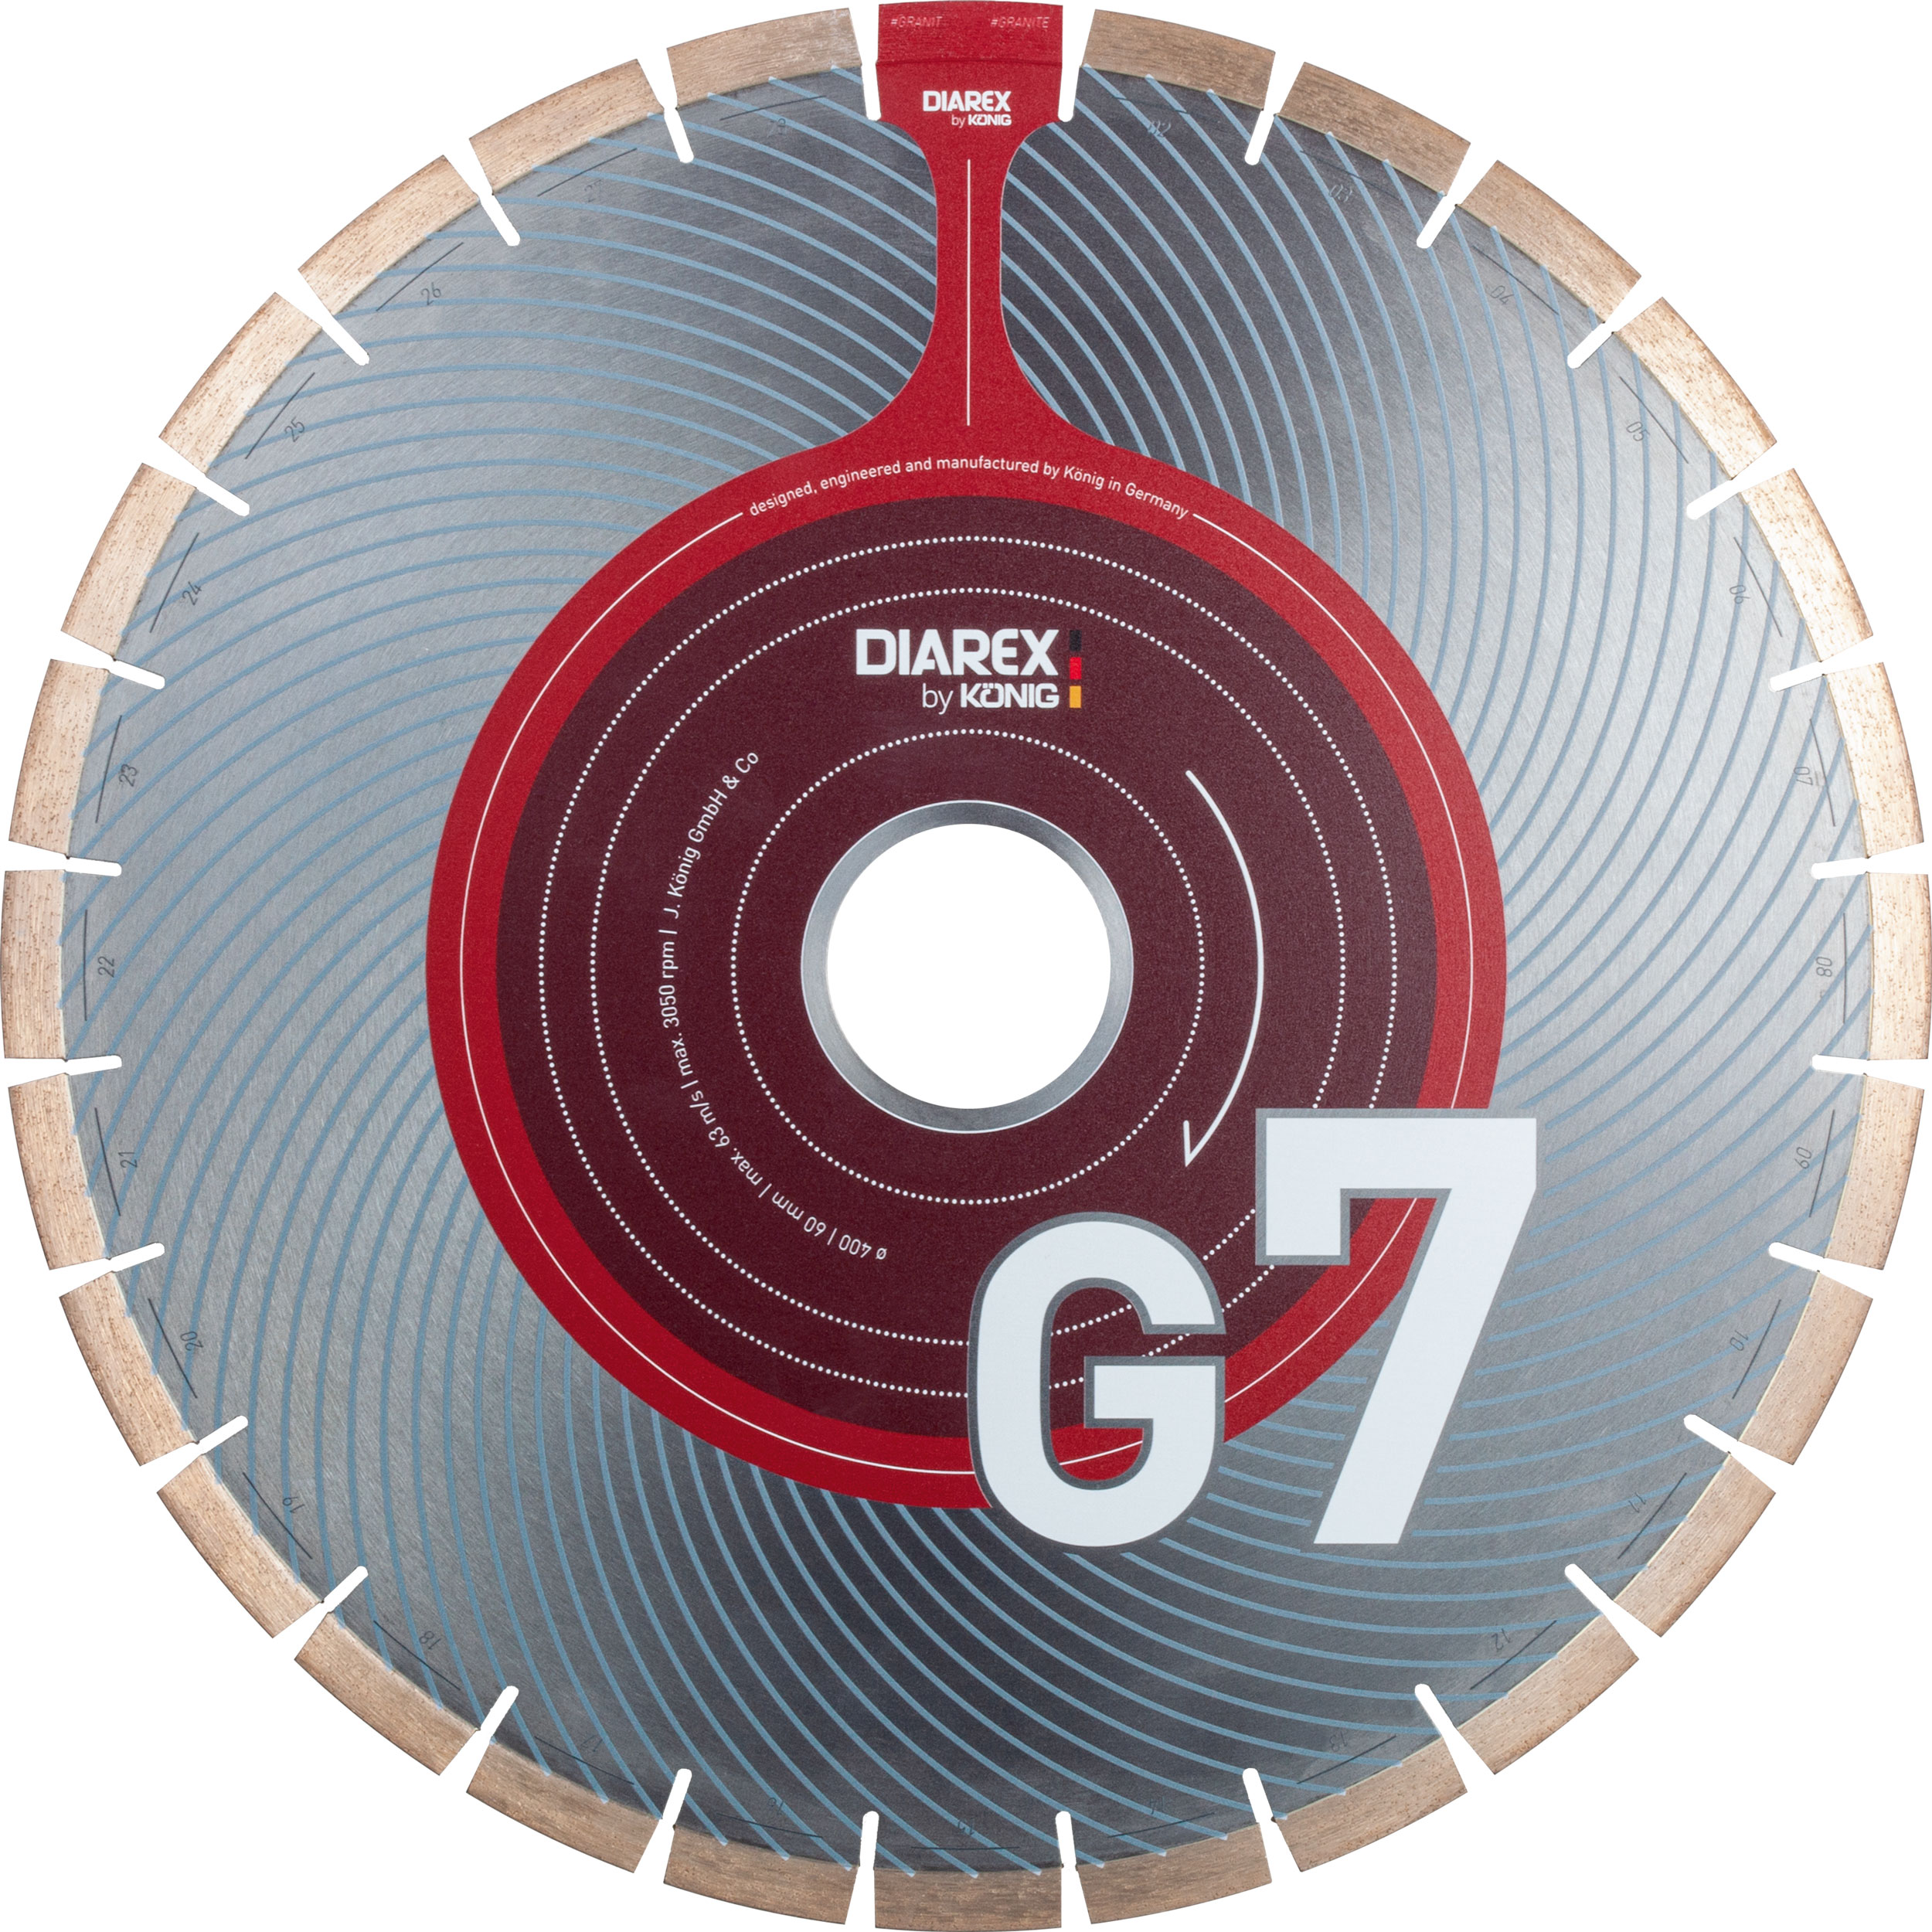 DIAREX blade G7 ø 400 mm | borehole 60 mm